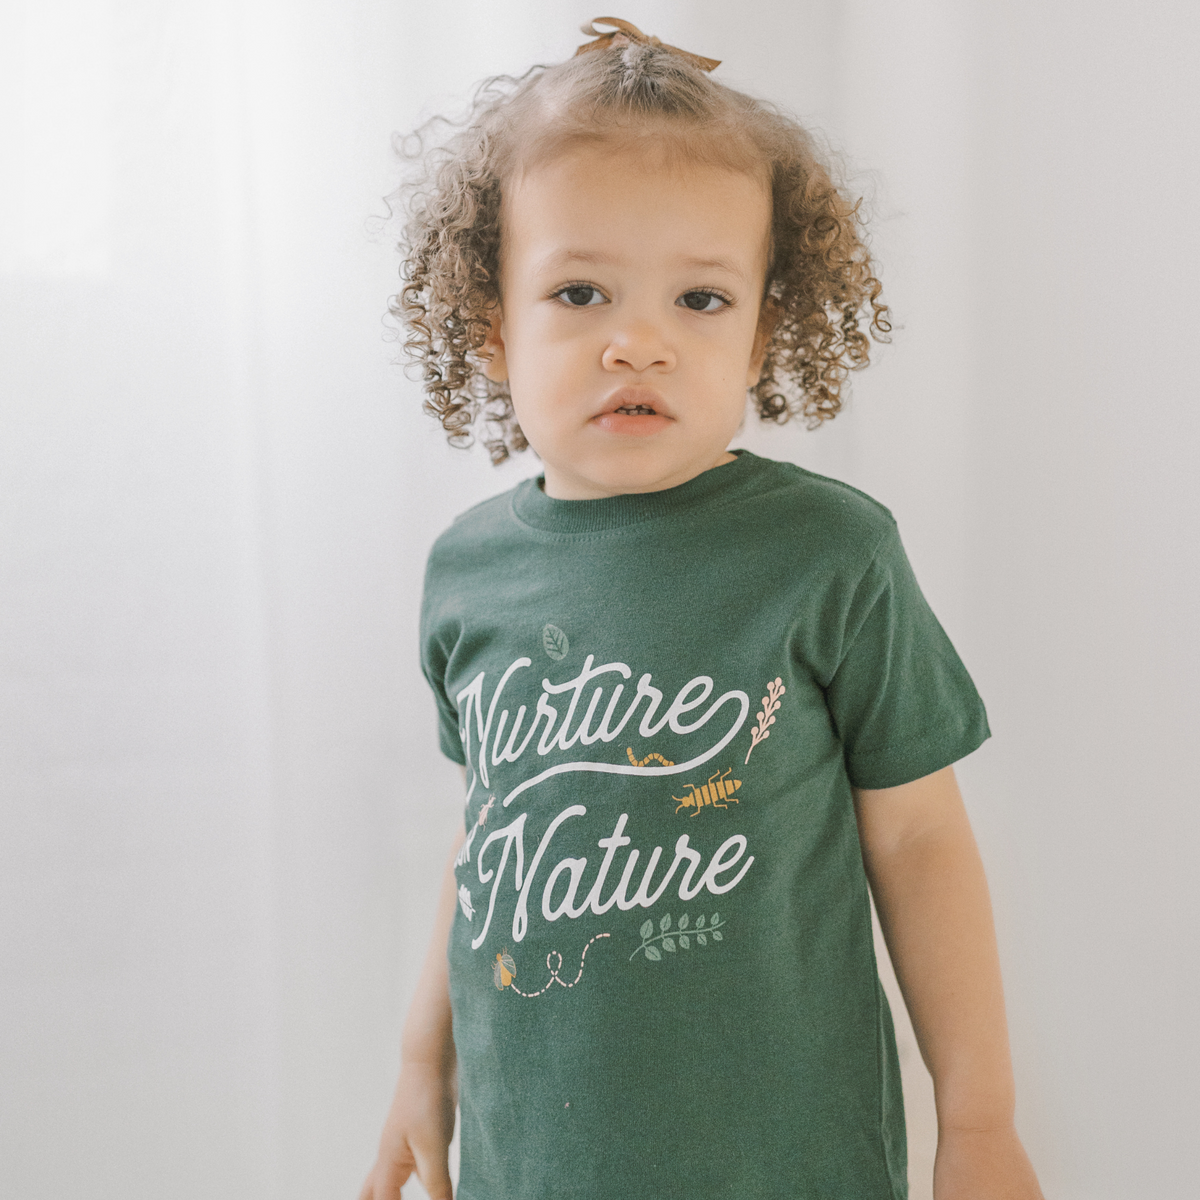 Nurture our Nature Toddler T-Shirt